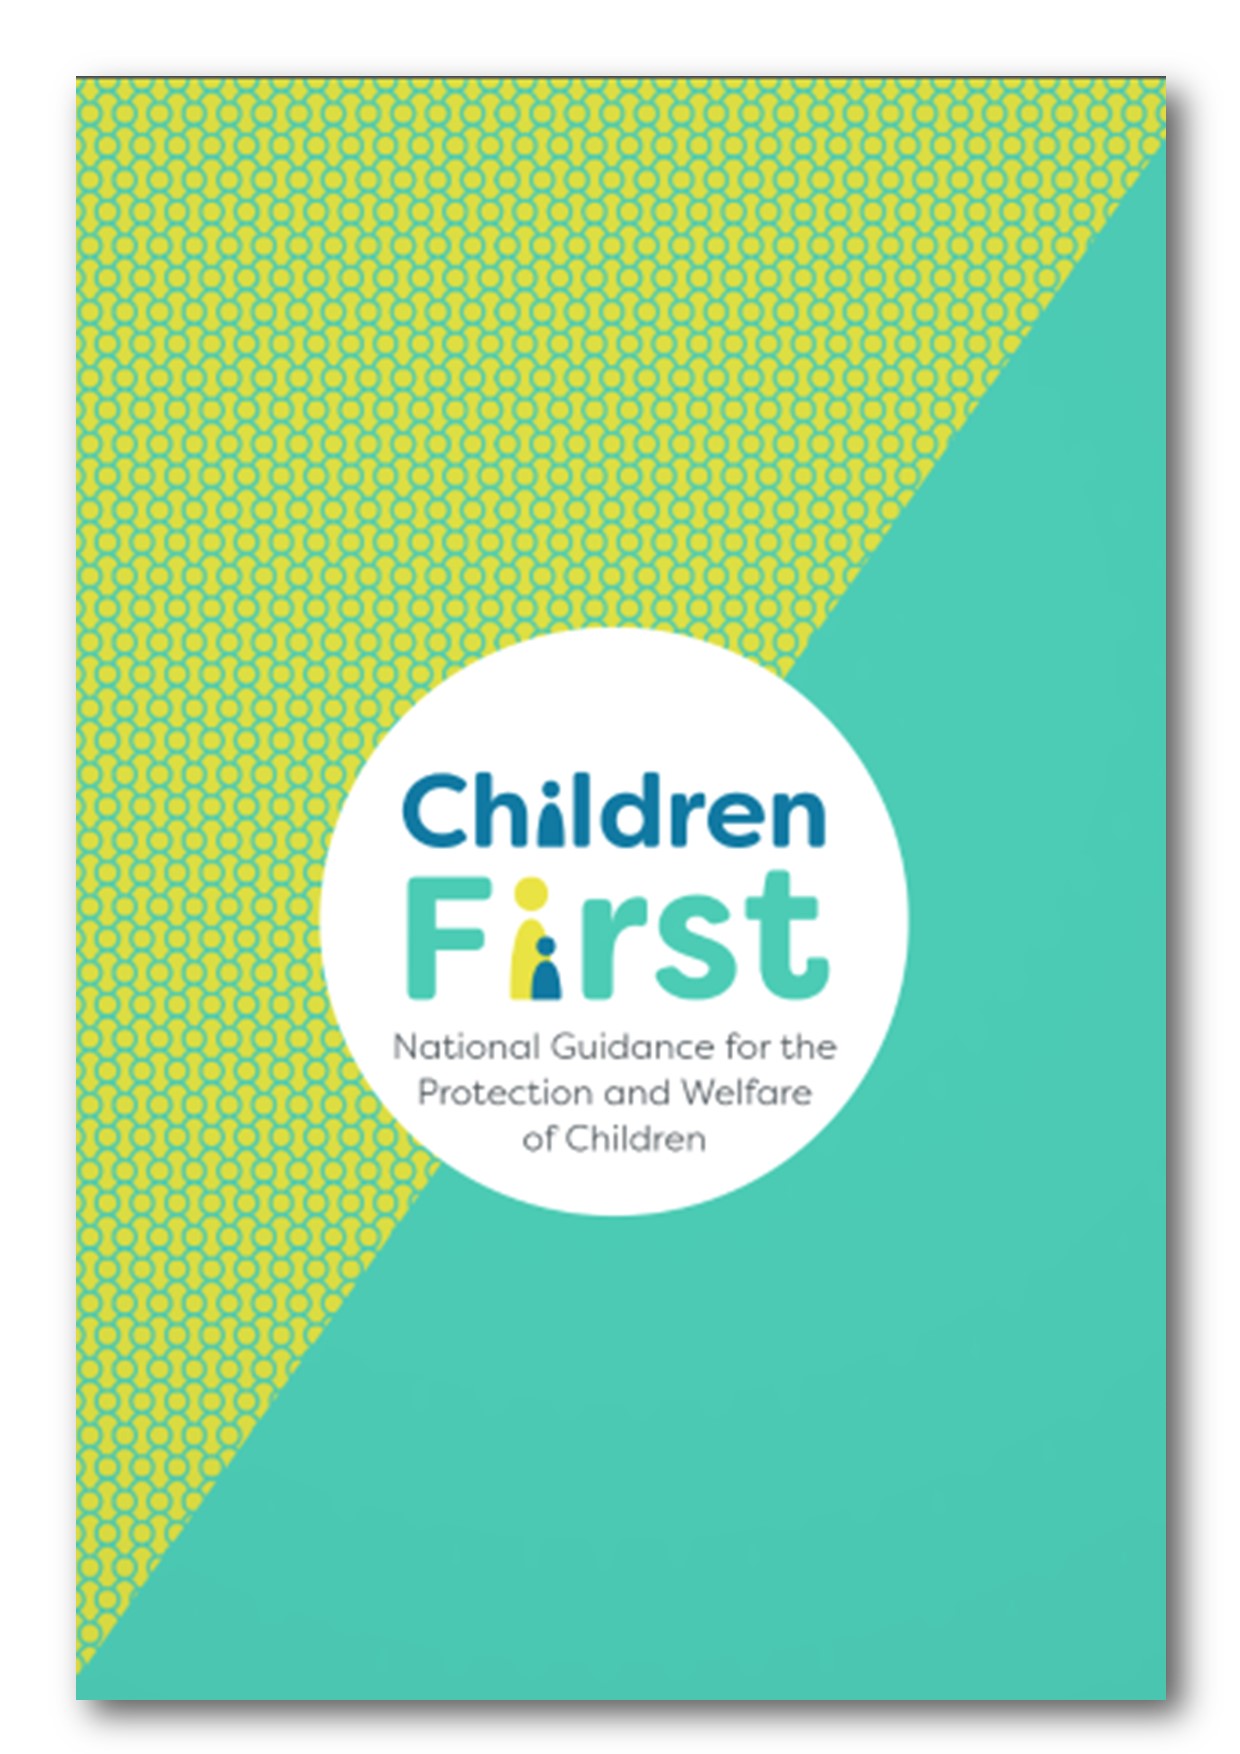 Childrens first